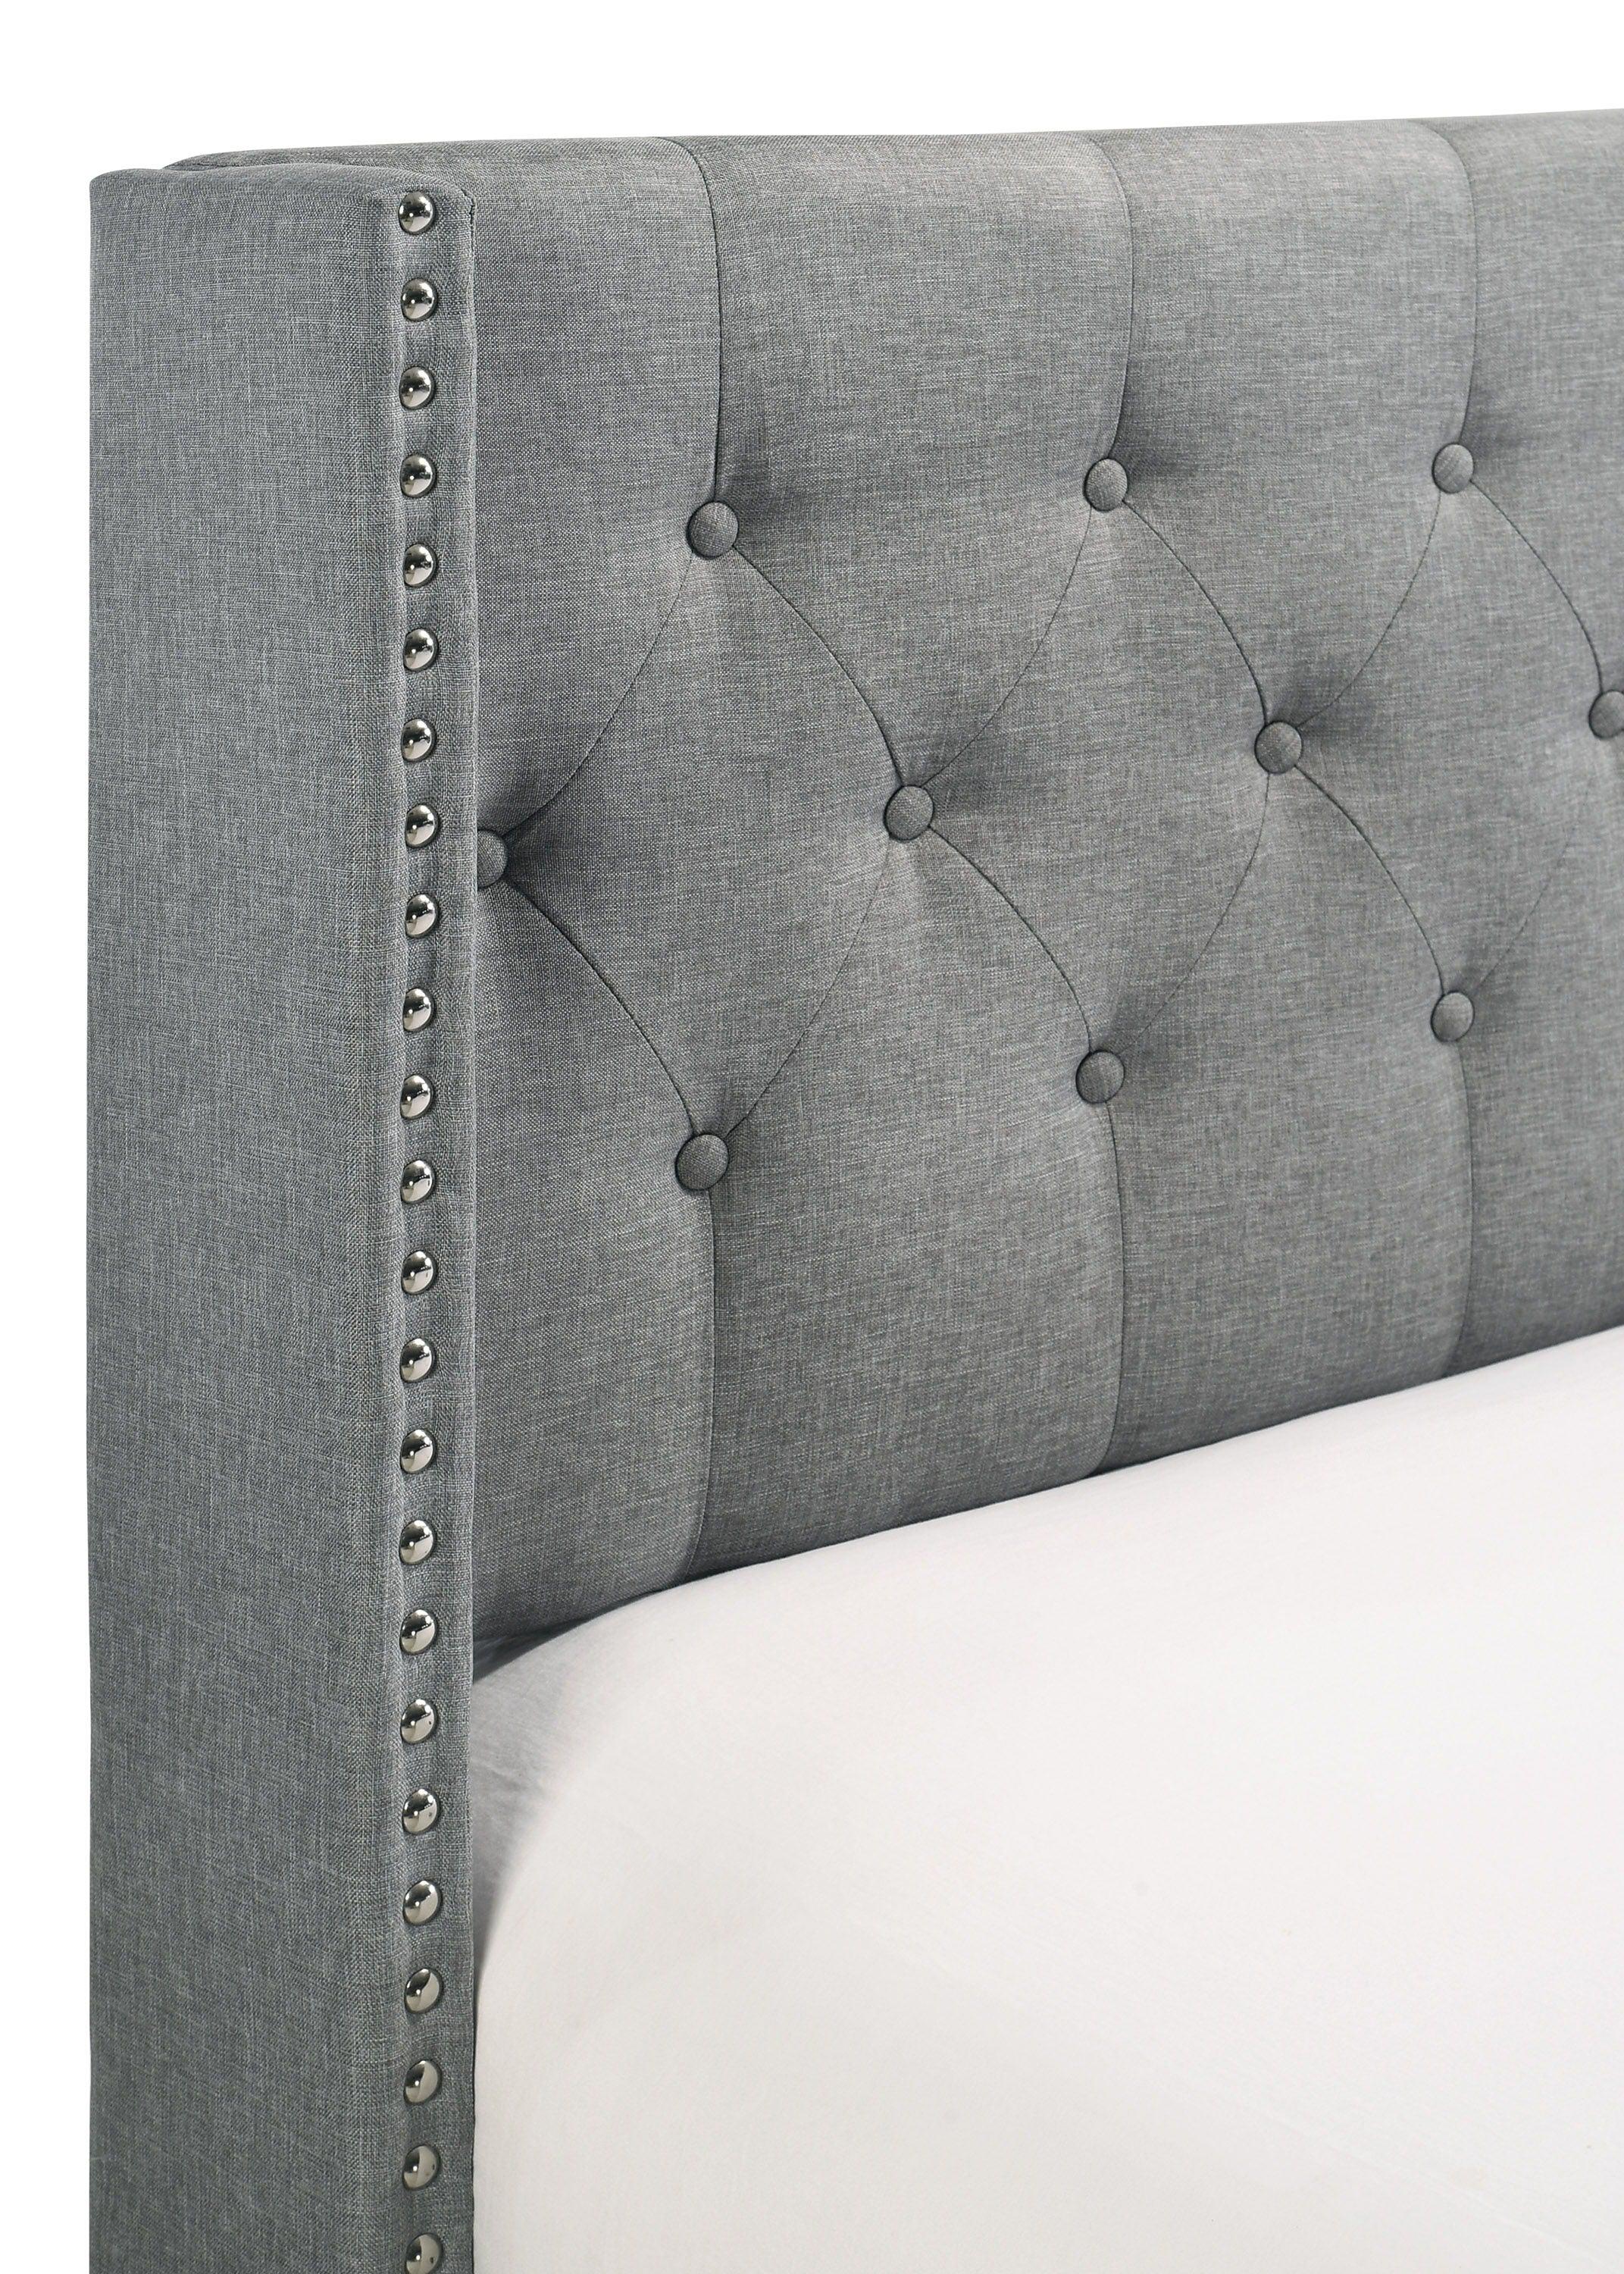 Crown Mark - Makayla - Bed - 5th Avenue Furniture